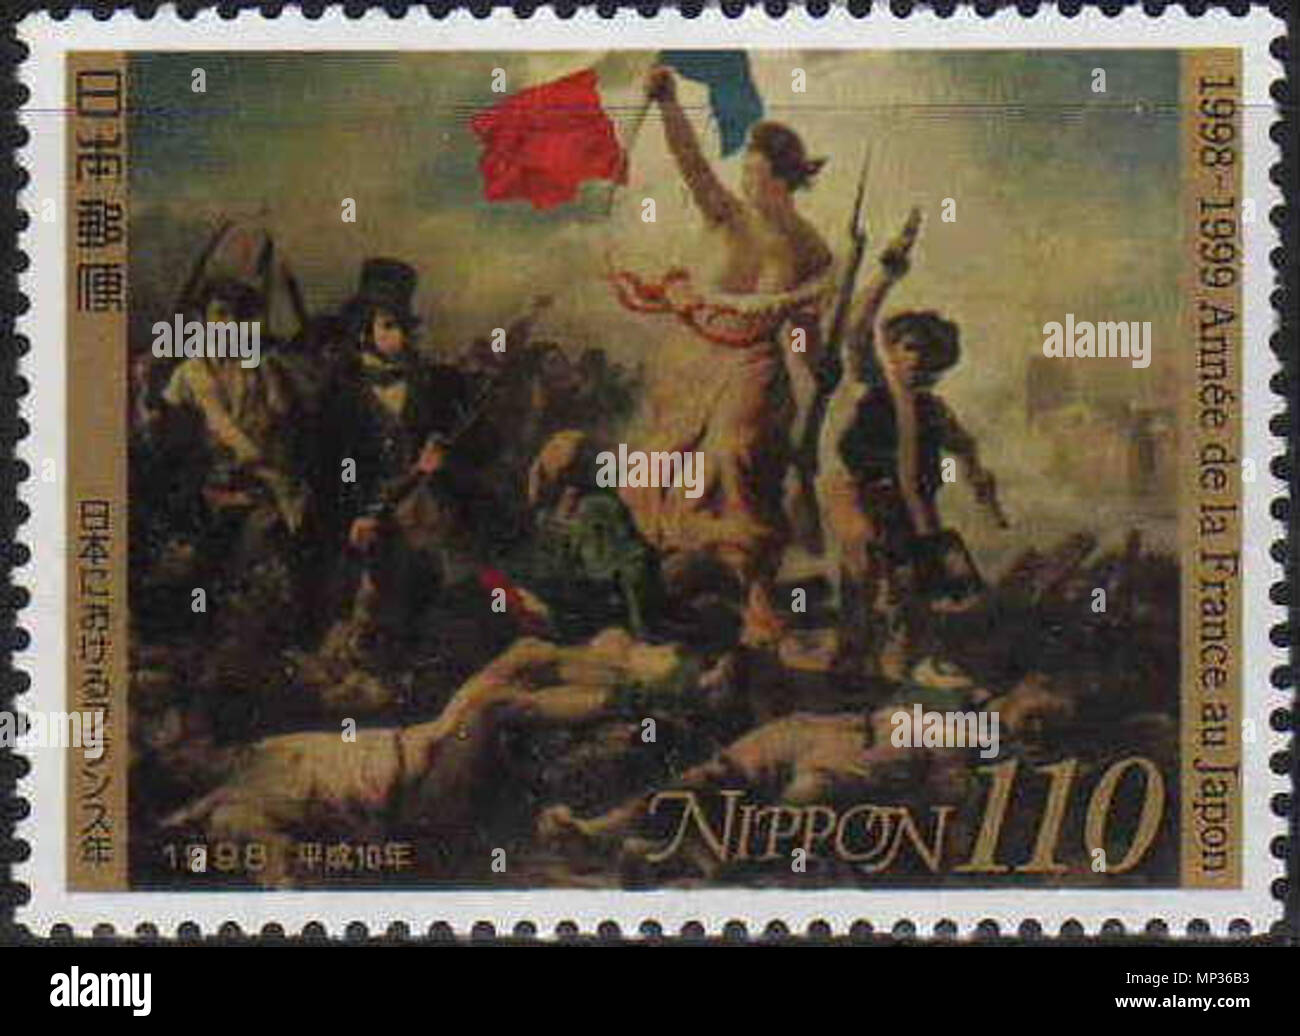 Ingles Sello De Eugene Delacroix La Liberte Guidant Le Peuple 日本語 日本におけるフランス年を記念して発行された1998年の日本切手 描かれているのはウジェーヌ ドラクロワによる 民衆を導く自由の女神 である Emision 1998 04 28 Eugene Delacroix Y